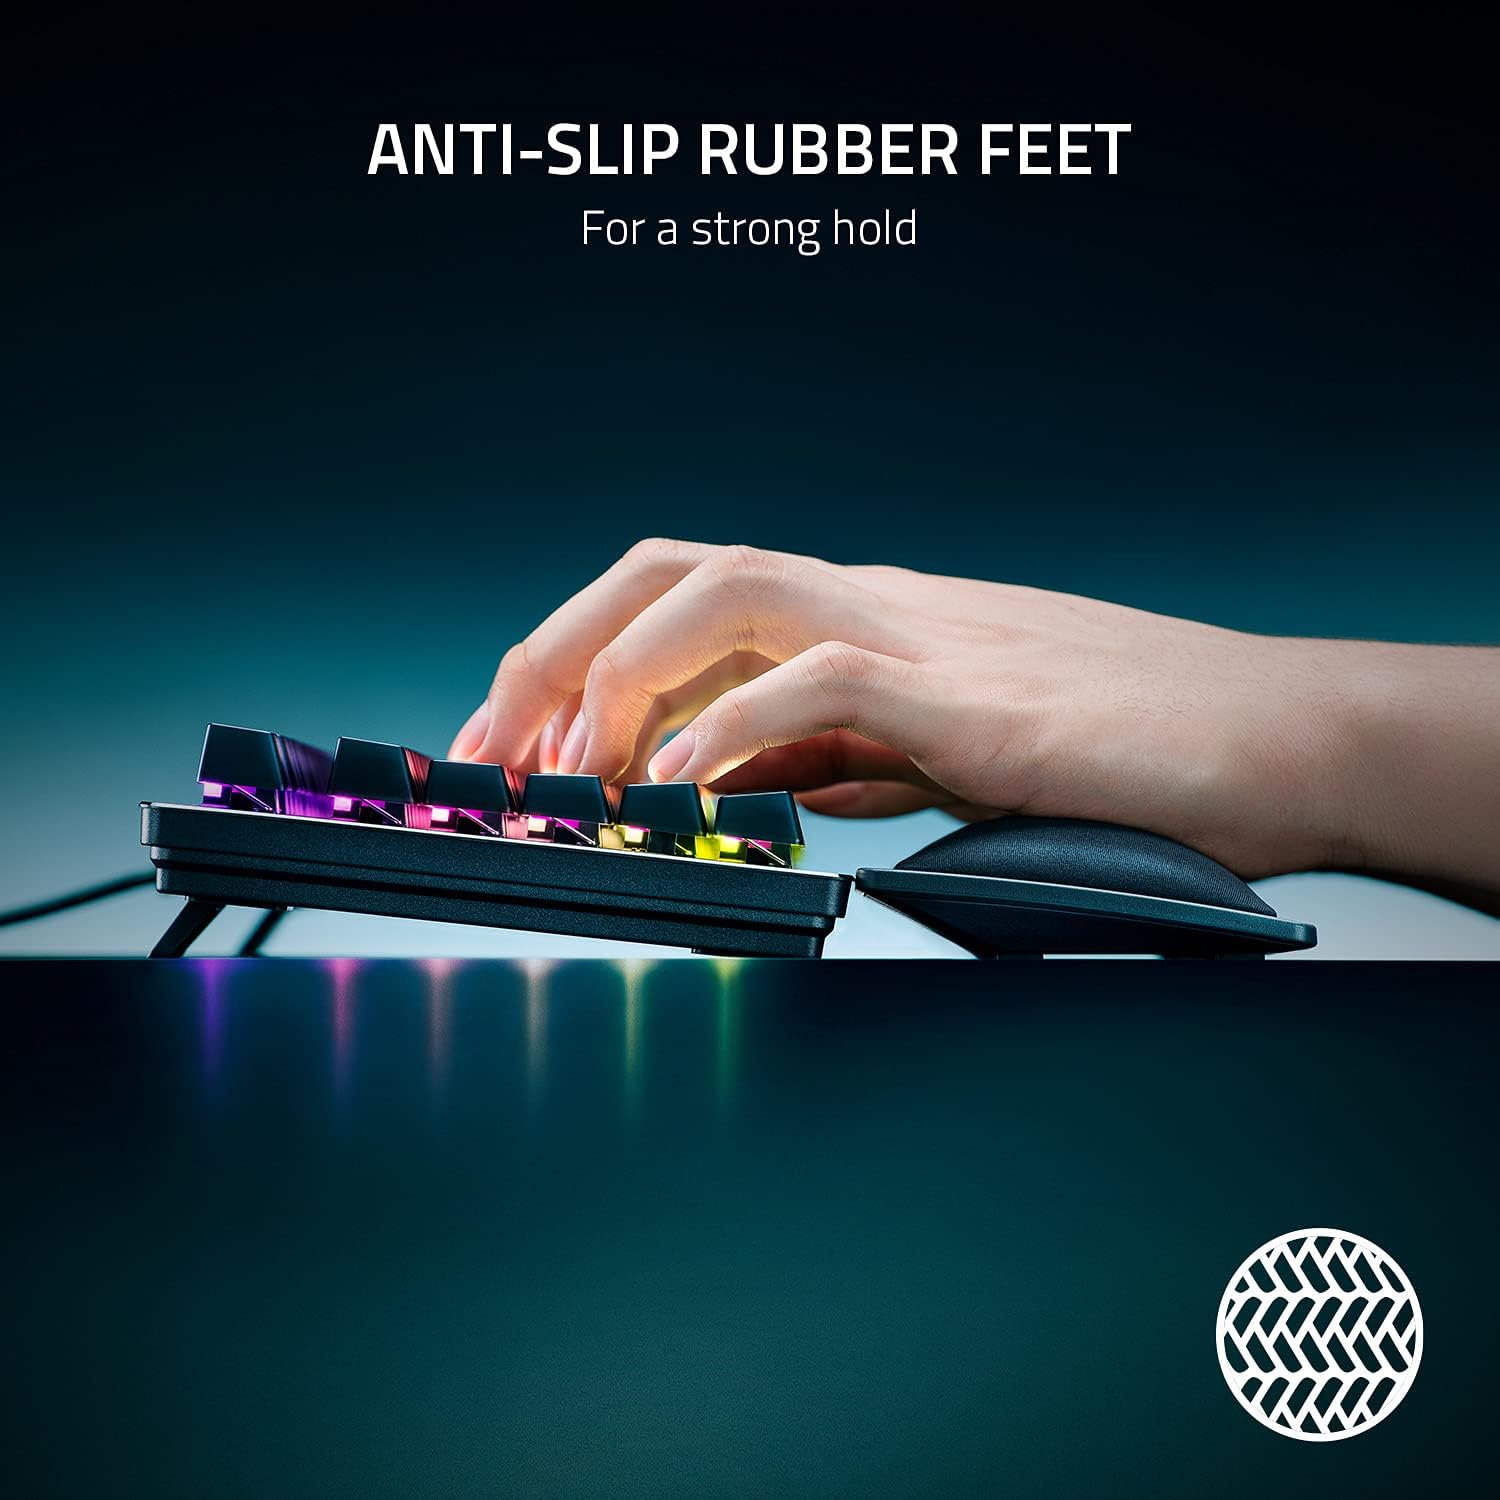 Razer Ergonomic Wrist Rest For Tenkeyless Keyboards, Anti-Slip Rubber Feet